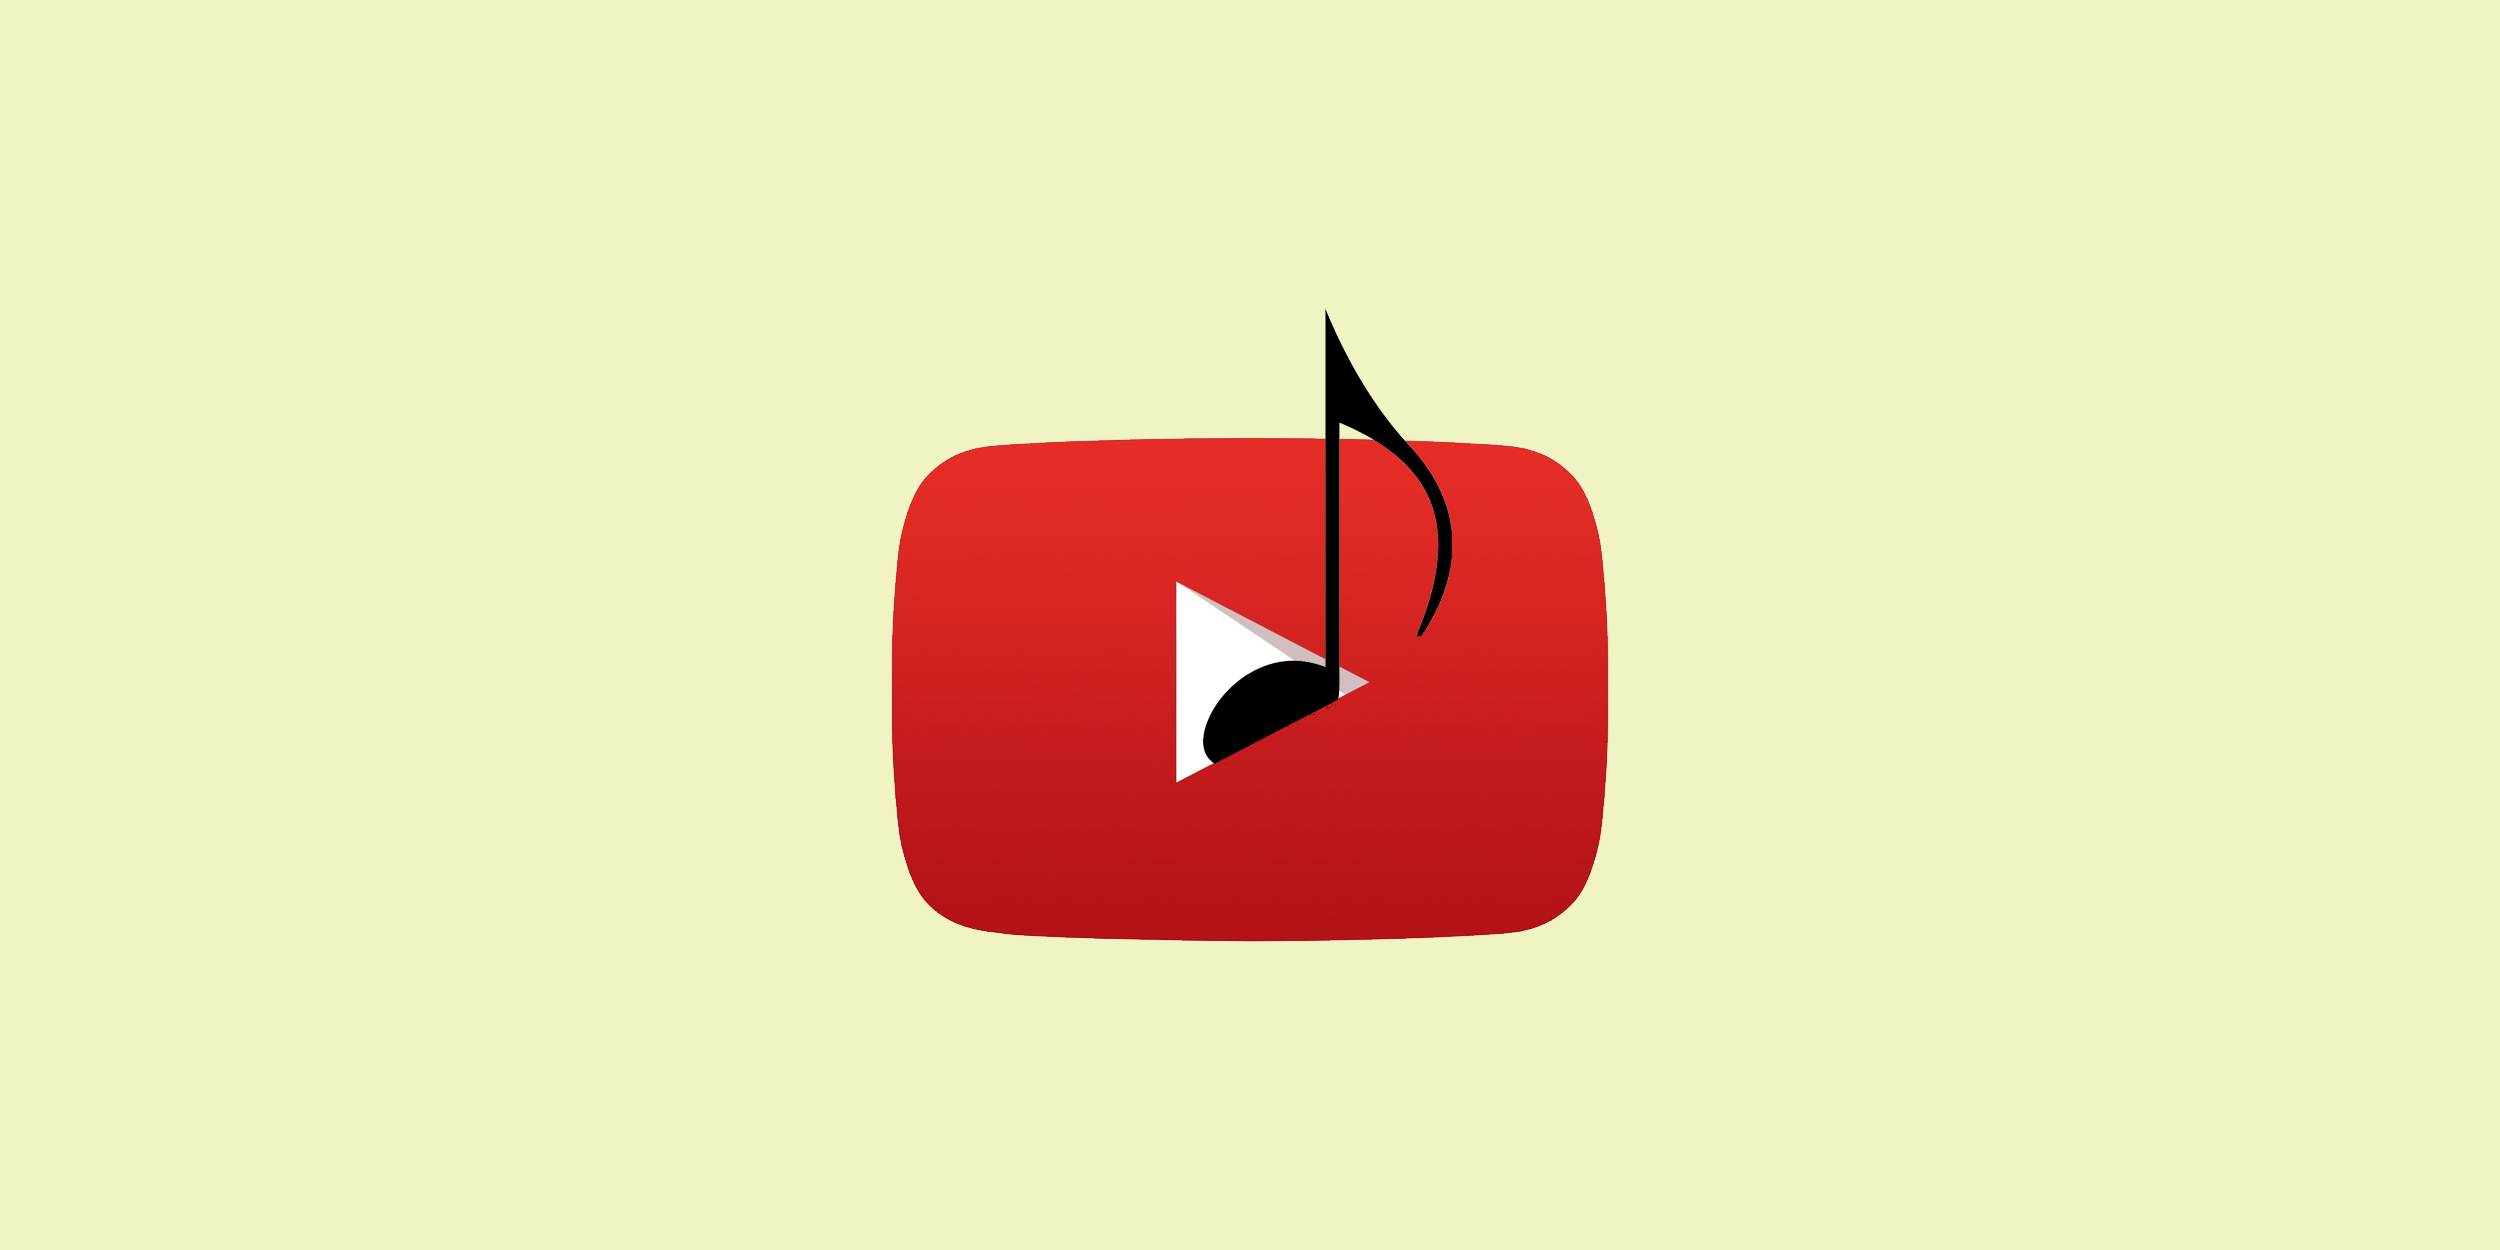 Moomash — альтернатива Shazam для распознавания музыки из видео - Лайфхакер